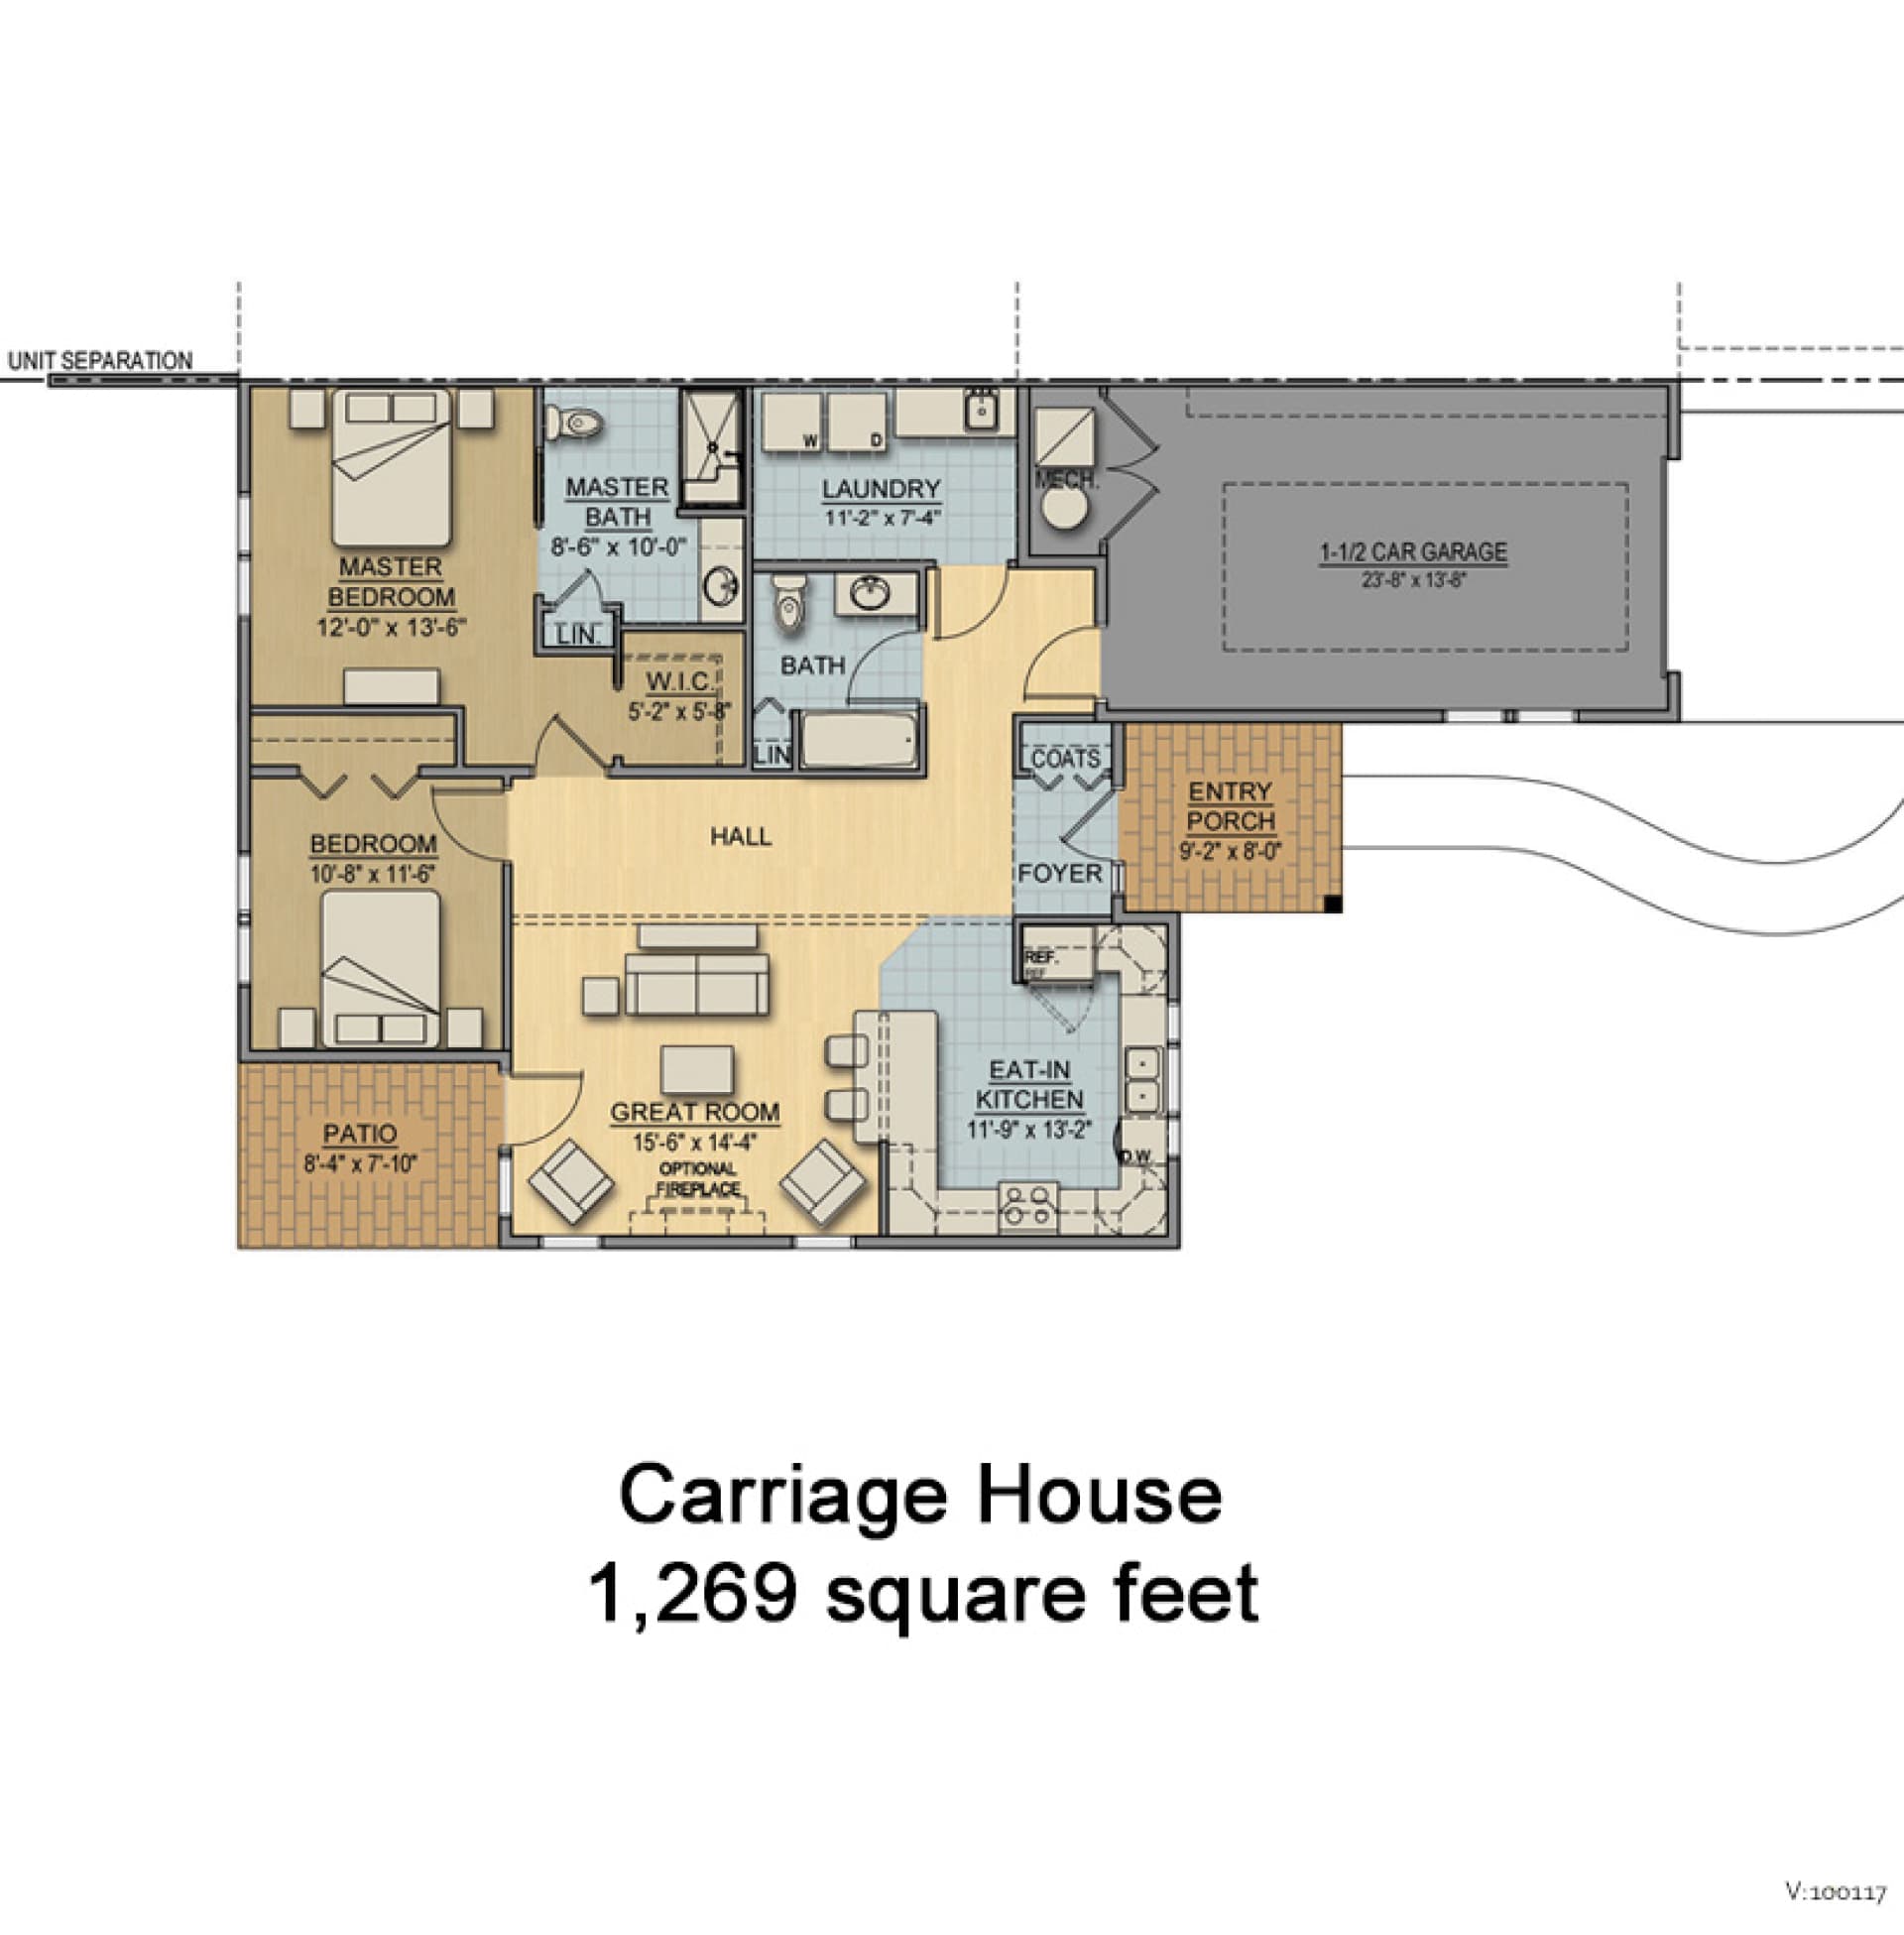 New-Cottage_Carriage-House-Floorplan-0001.jpg